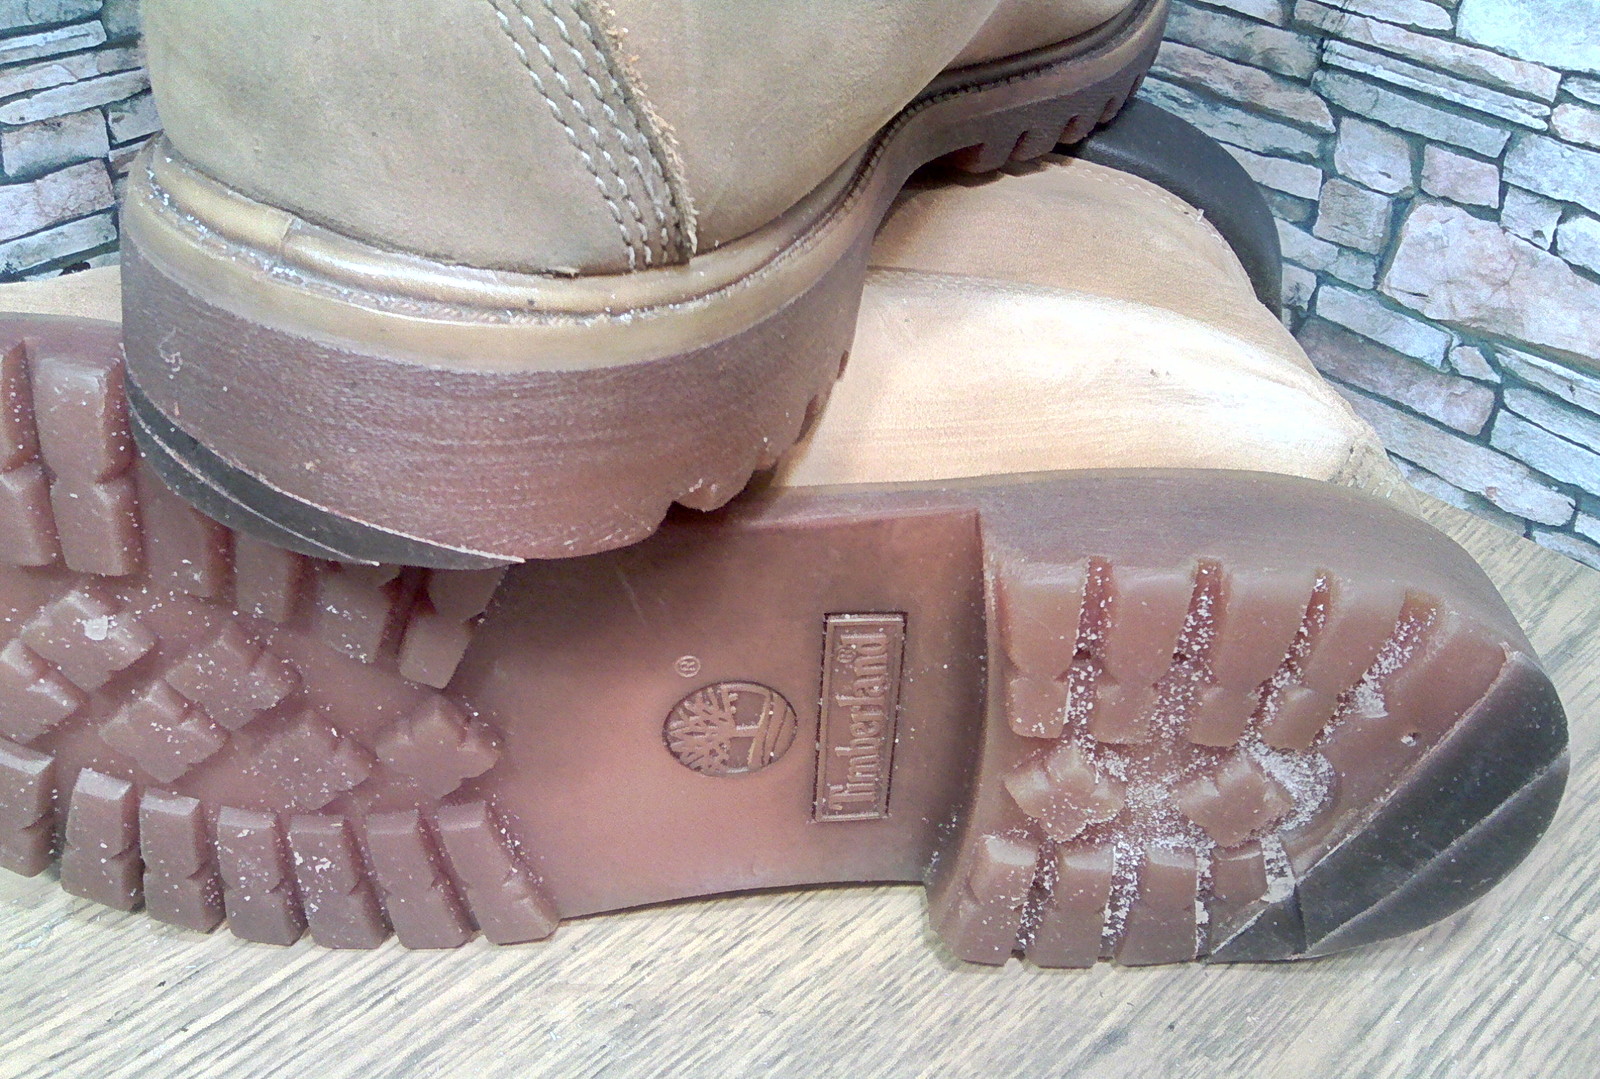 Трещины на ботинках. Timberland 8551 1r. Тимберленд подошва отклеилась. Подошва для обуви тимберленд. Ботинки Timberland подошва.